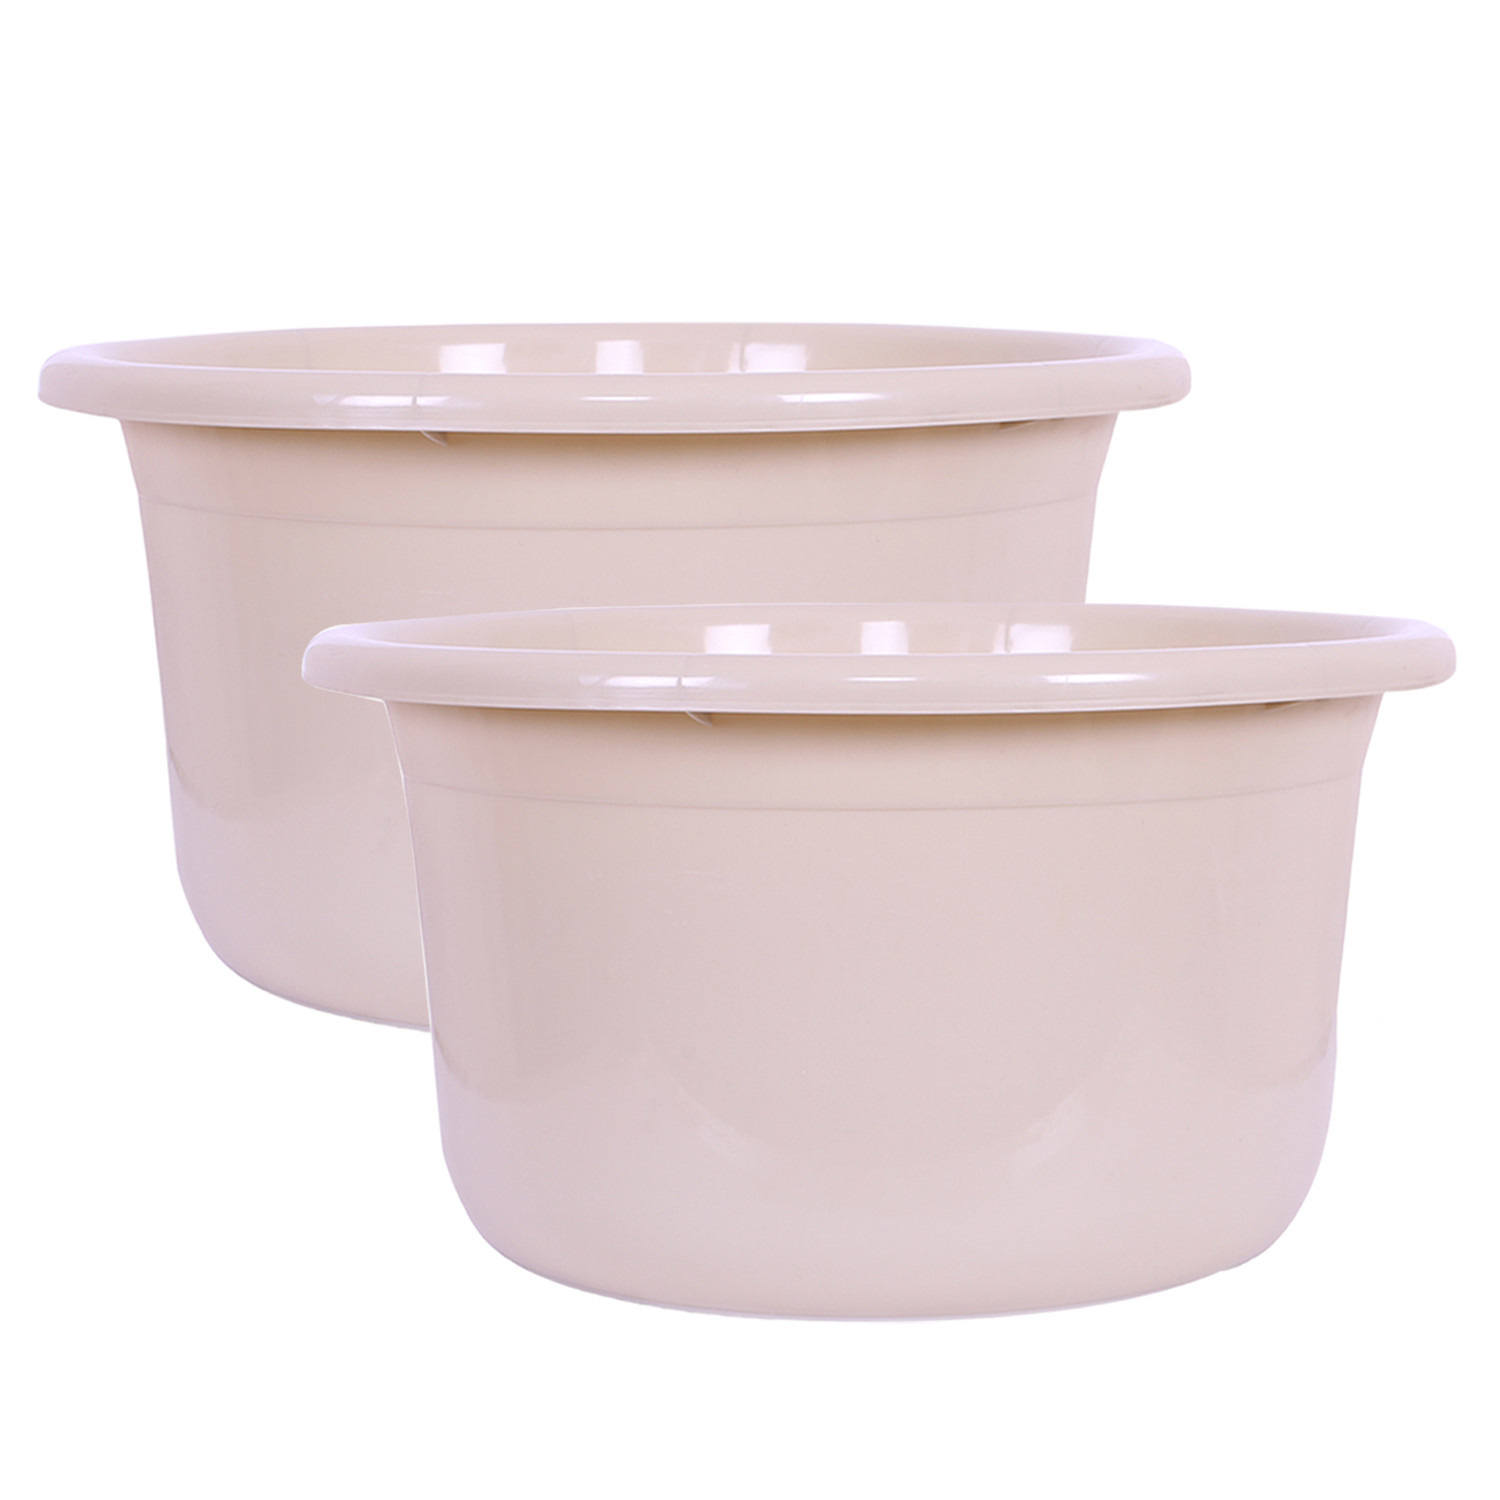 Kuber Industries Bath Tub | Versatile Utility Gaint Tub | Plastic Bath Tub for Baby | Baby Bathing Tub | Clothes Washing Tub For Bathroom | Feeding Pan Tub | TUB-25 LTR | Beige